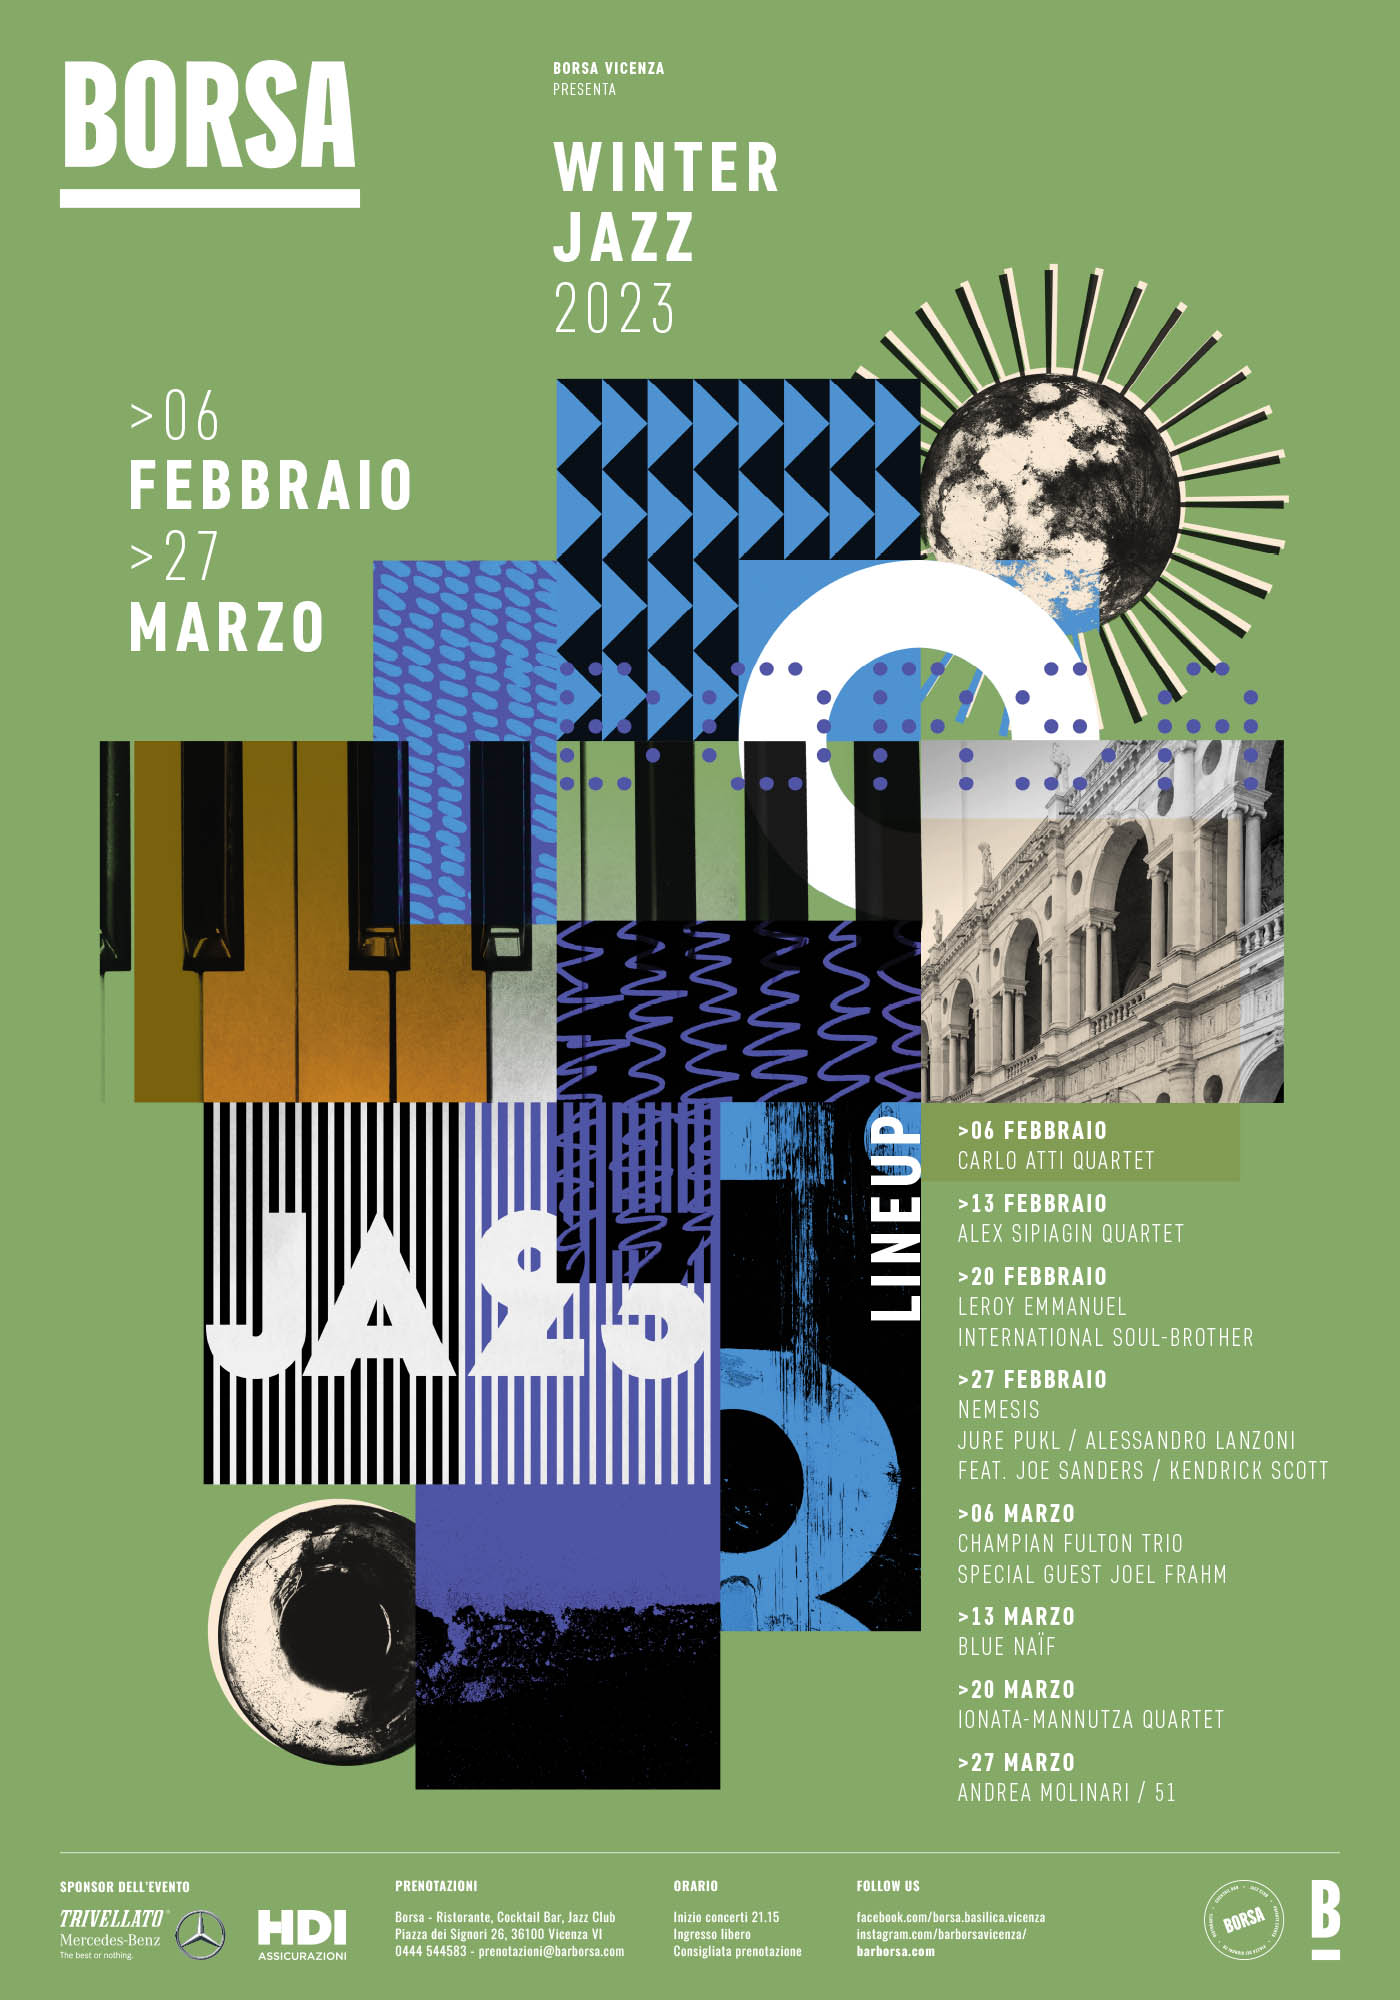 Borsa Vicenza - Ristorante * Cocktail bar * Jazz Club * Private Events - Winter Jazz Festival 2023